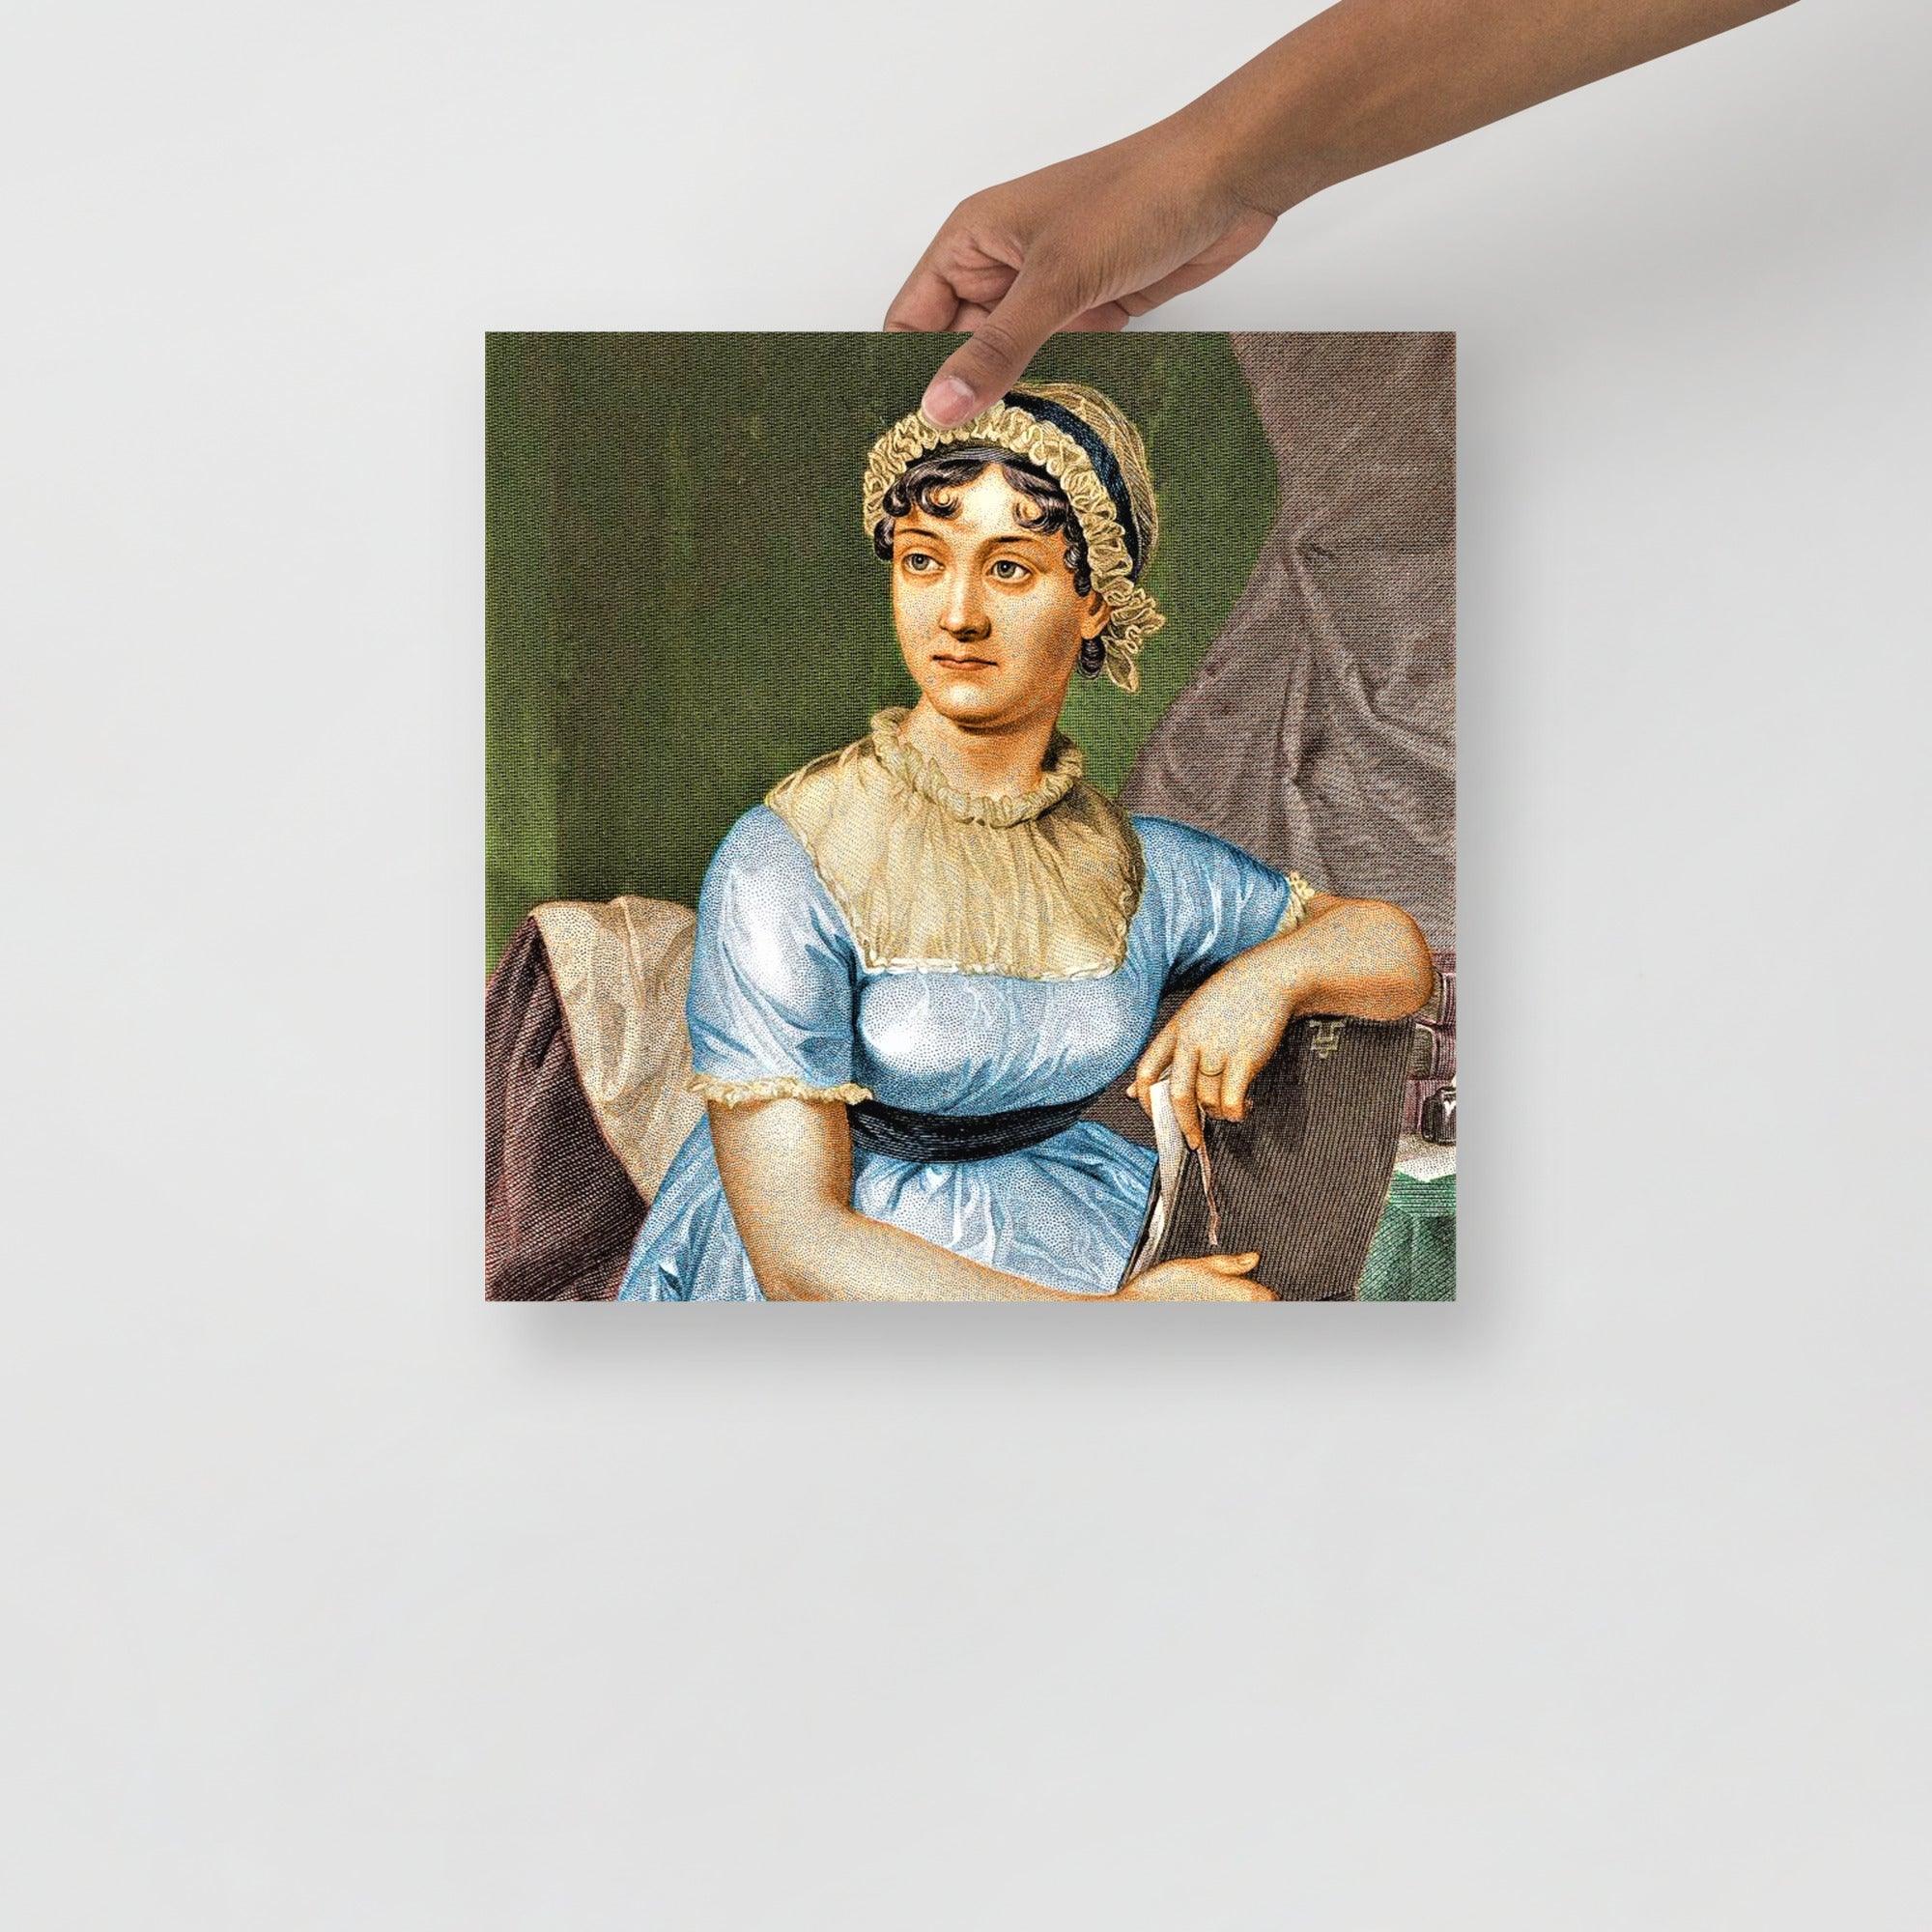 A Jane Austen poster on a plain backdrop in size 14x14”.